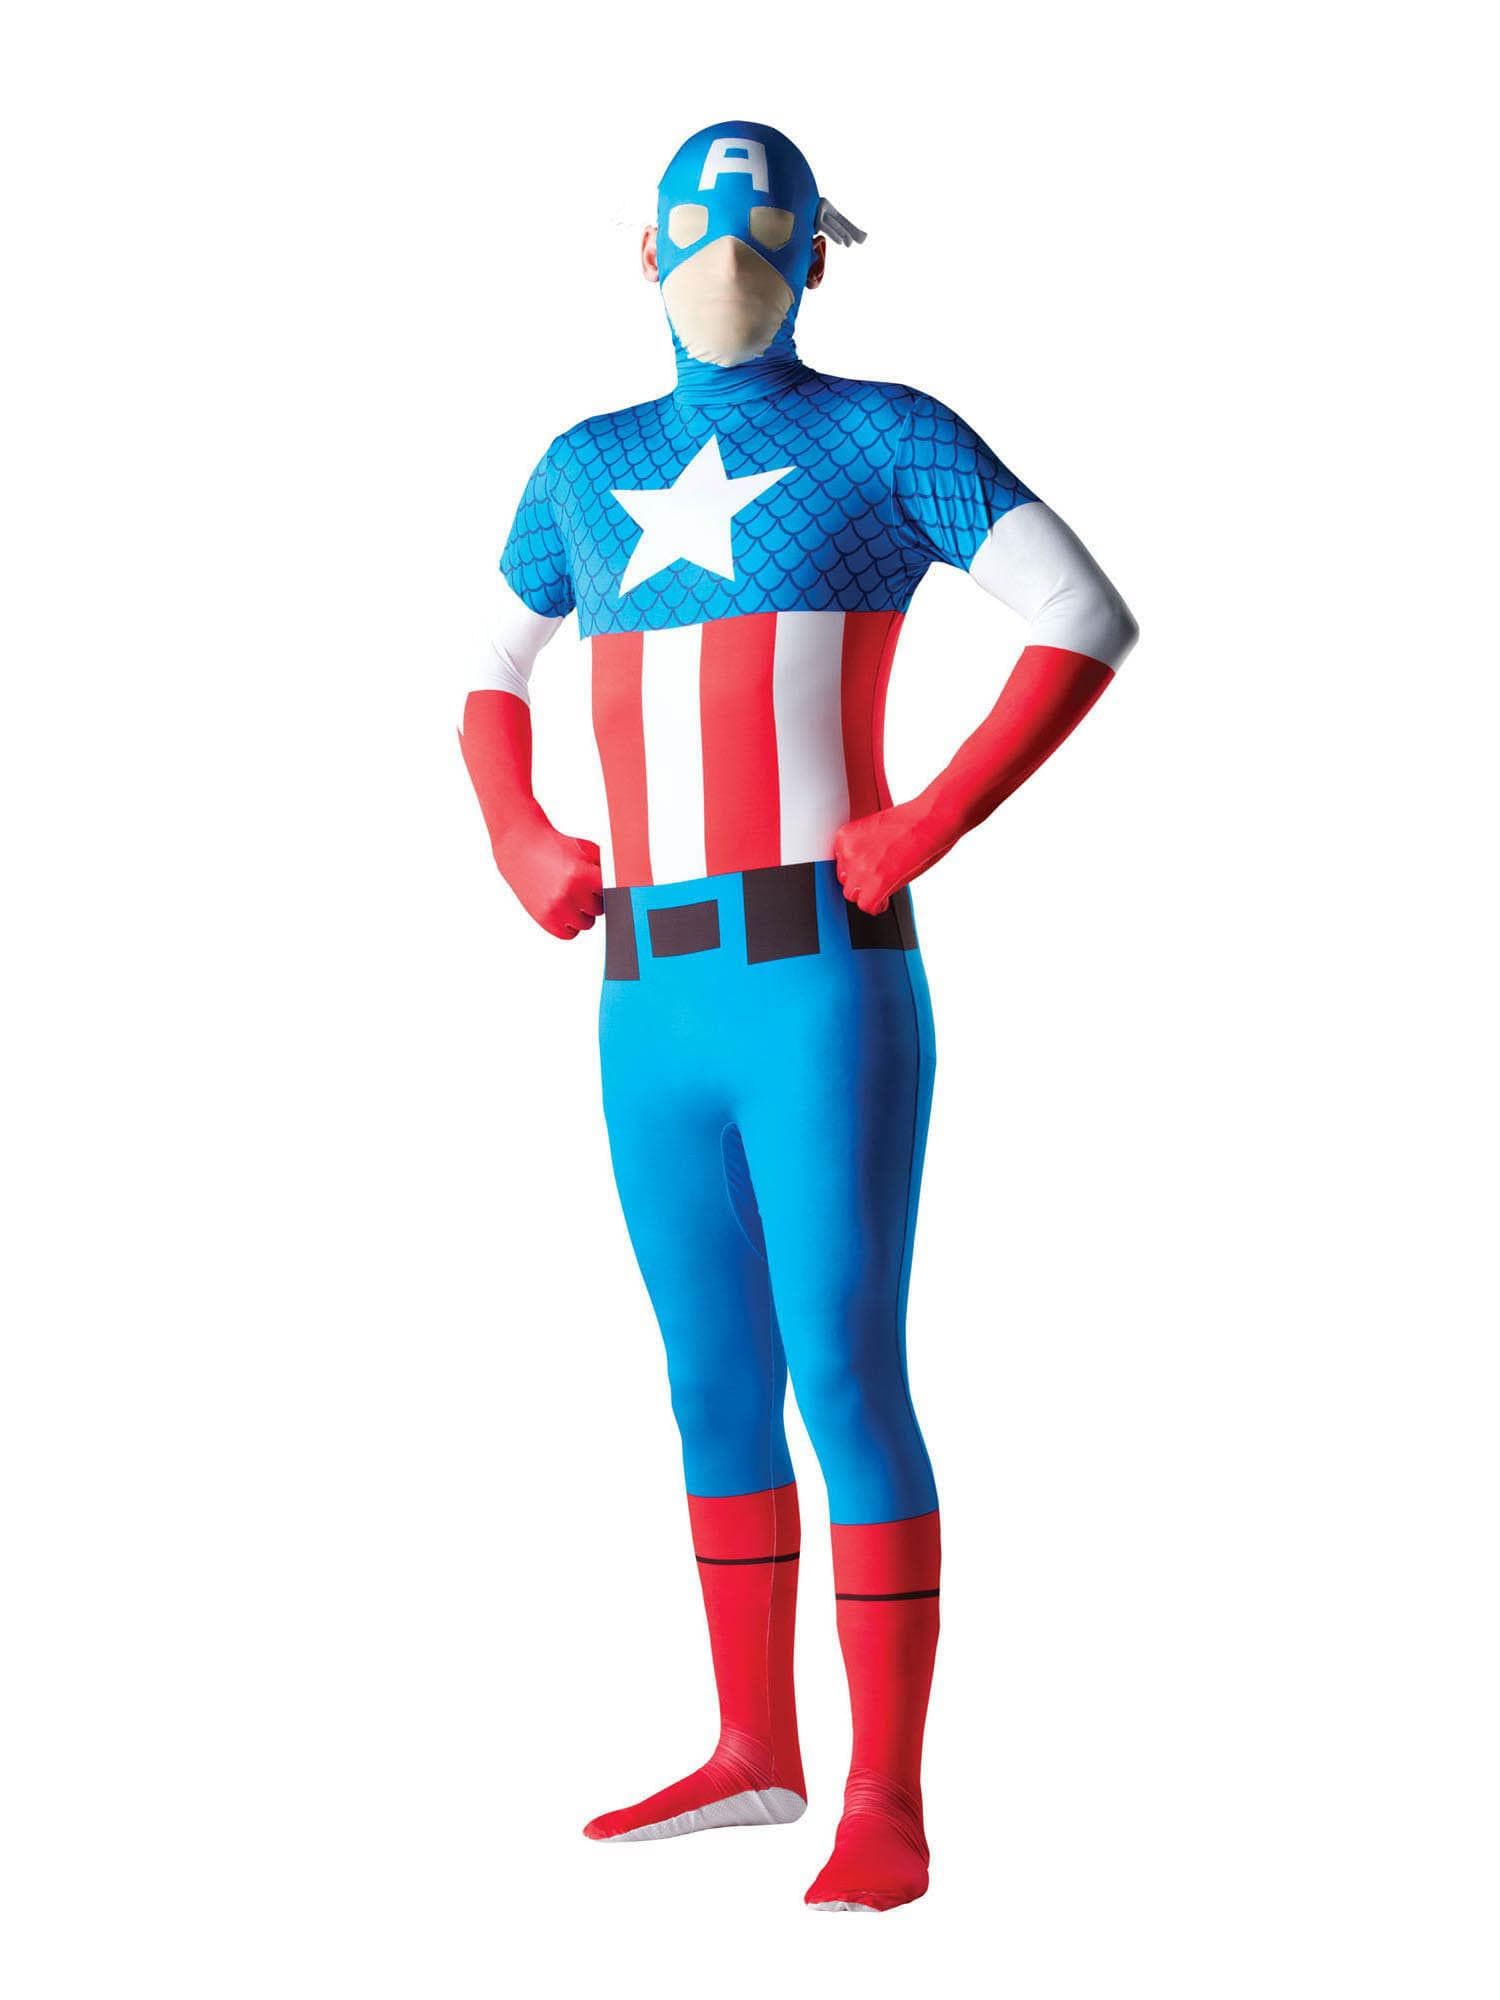 Adult Avengers Captain America Costume - costumes.com